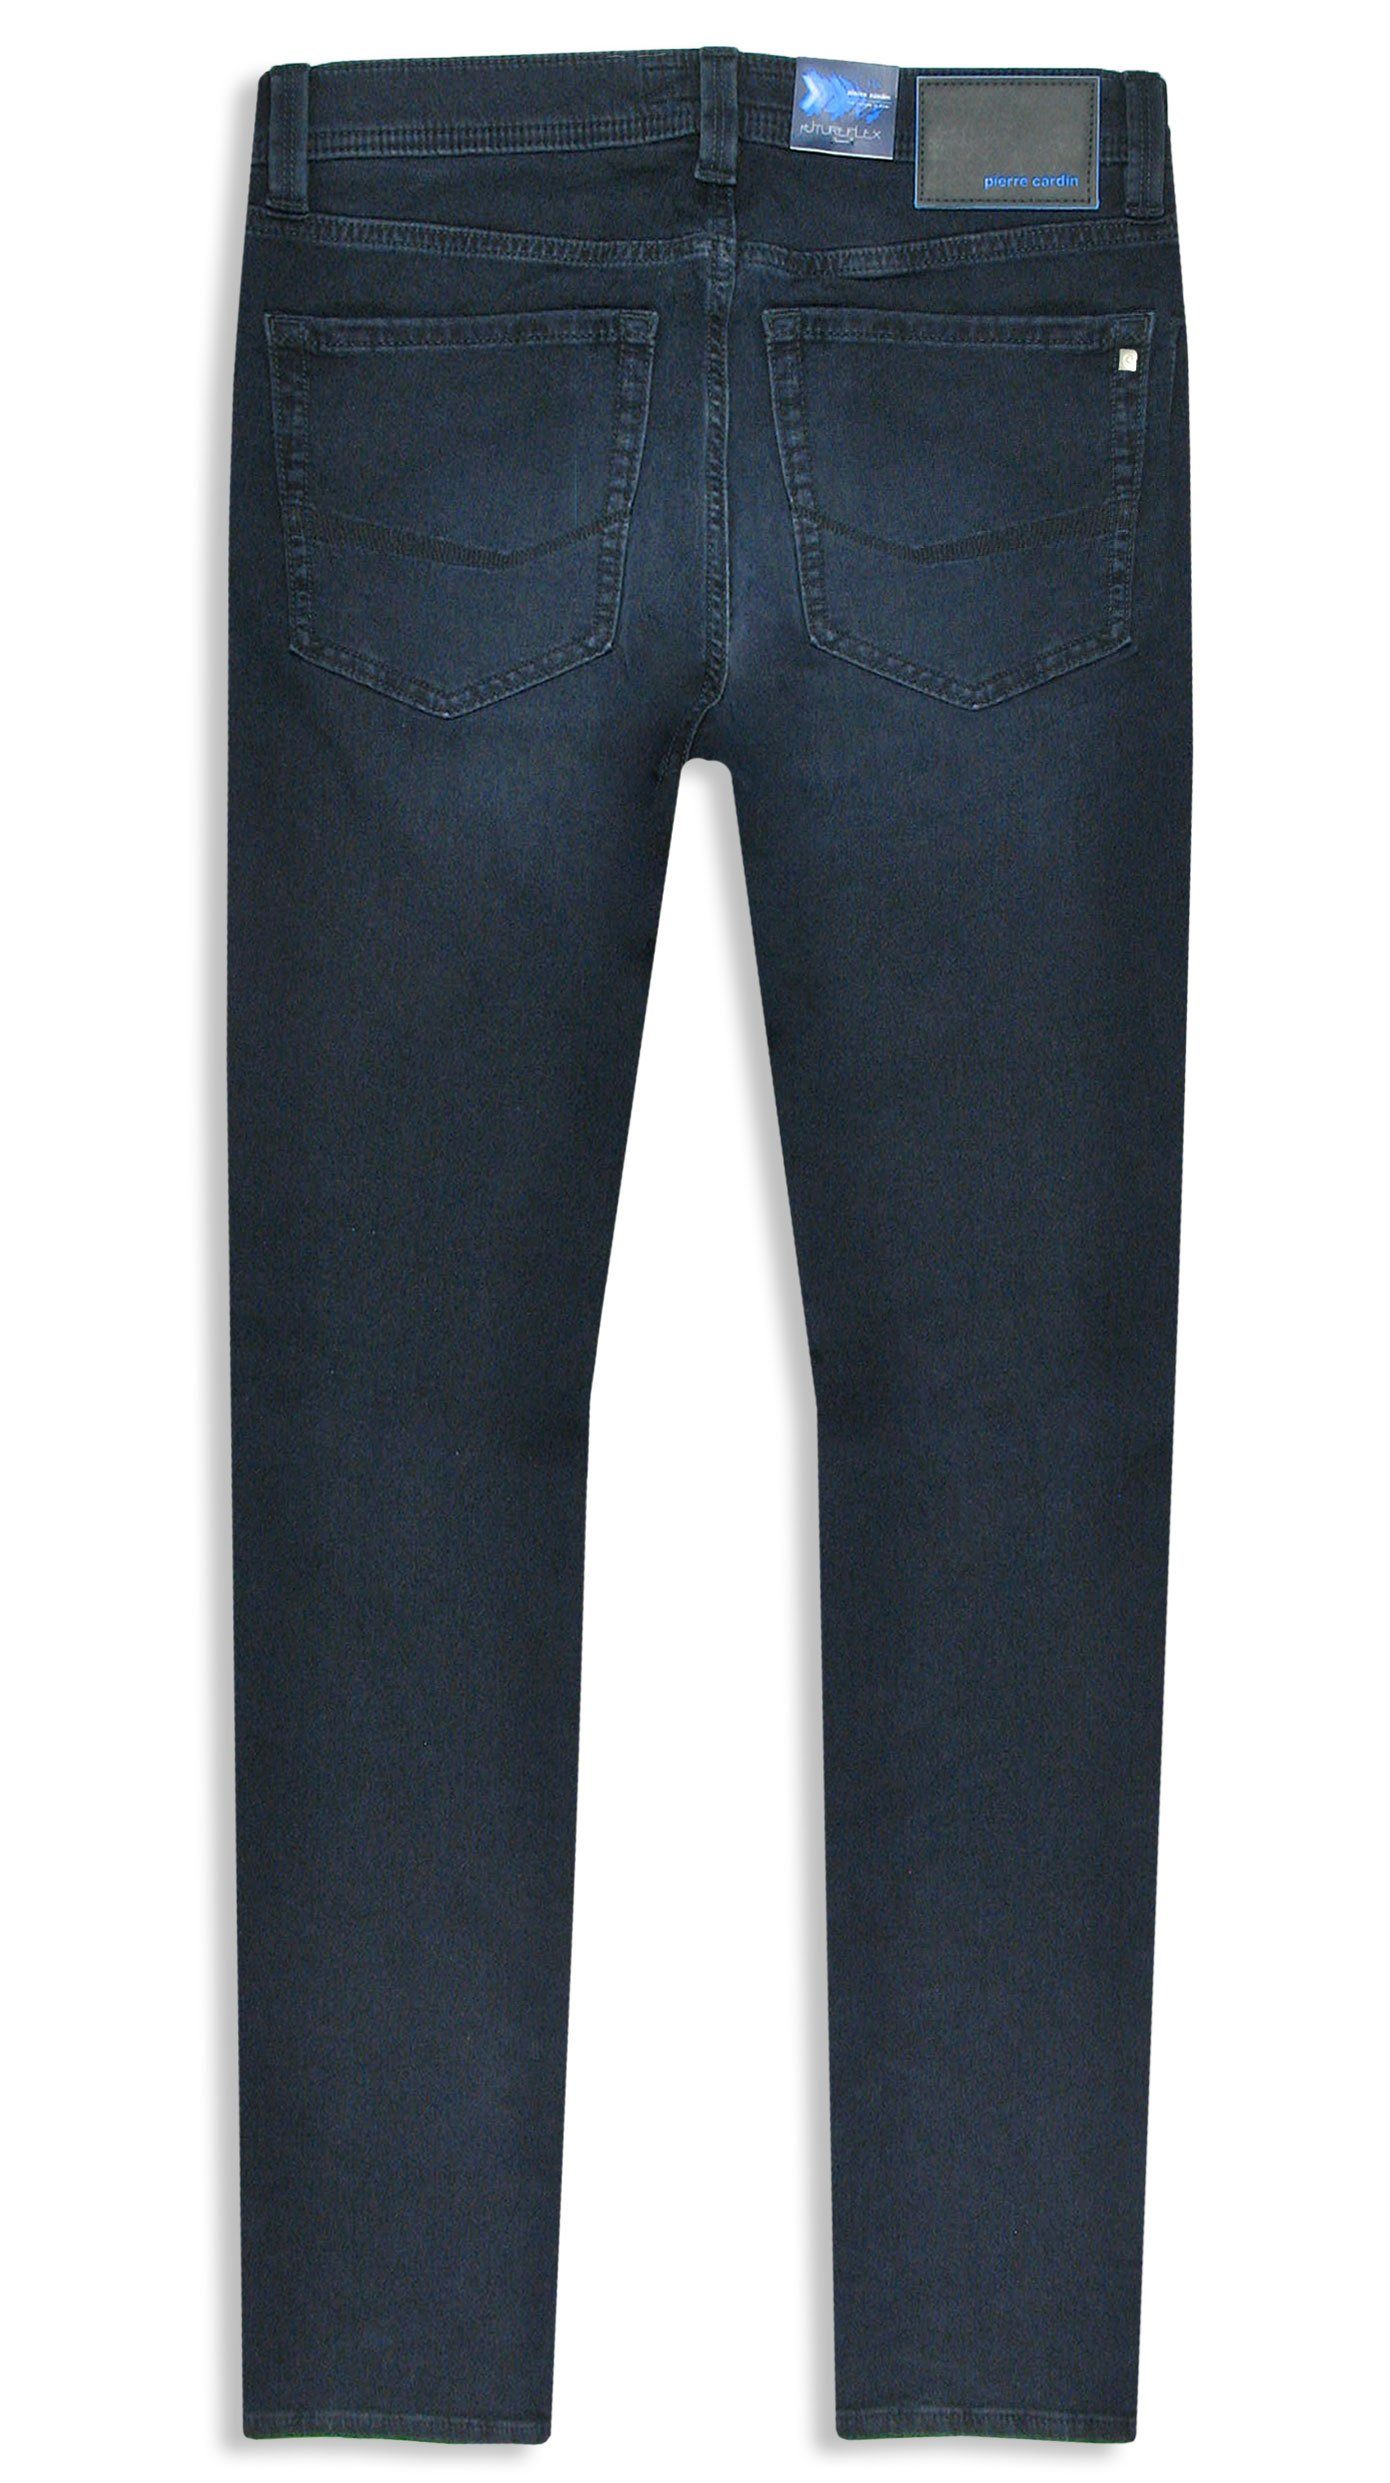 Tapered Organic Blue Fit 5-Pocket-Jeans Deep Cardin Pierre Futureflex Lyon Buffies Cotton Jeans